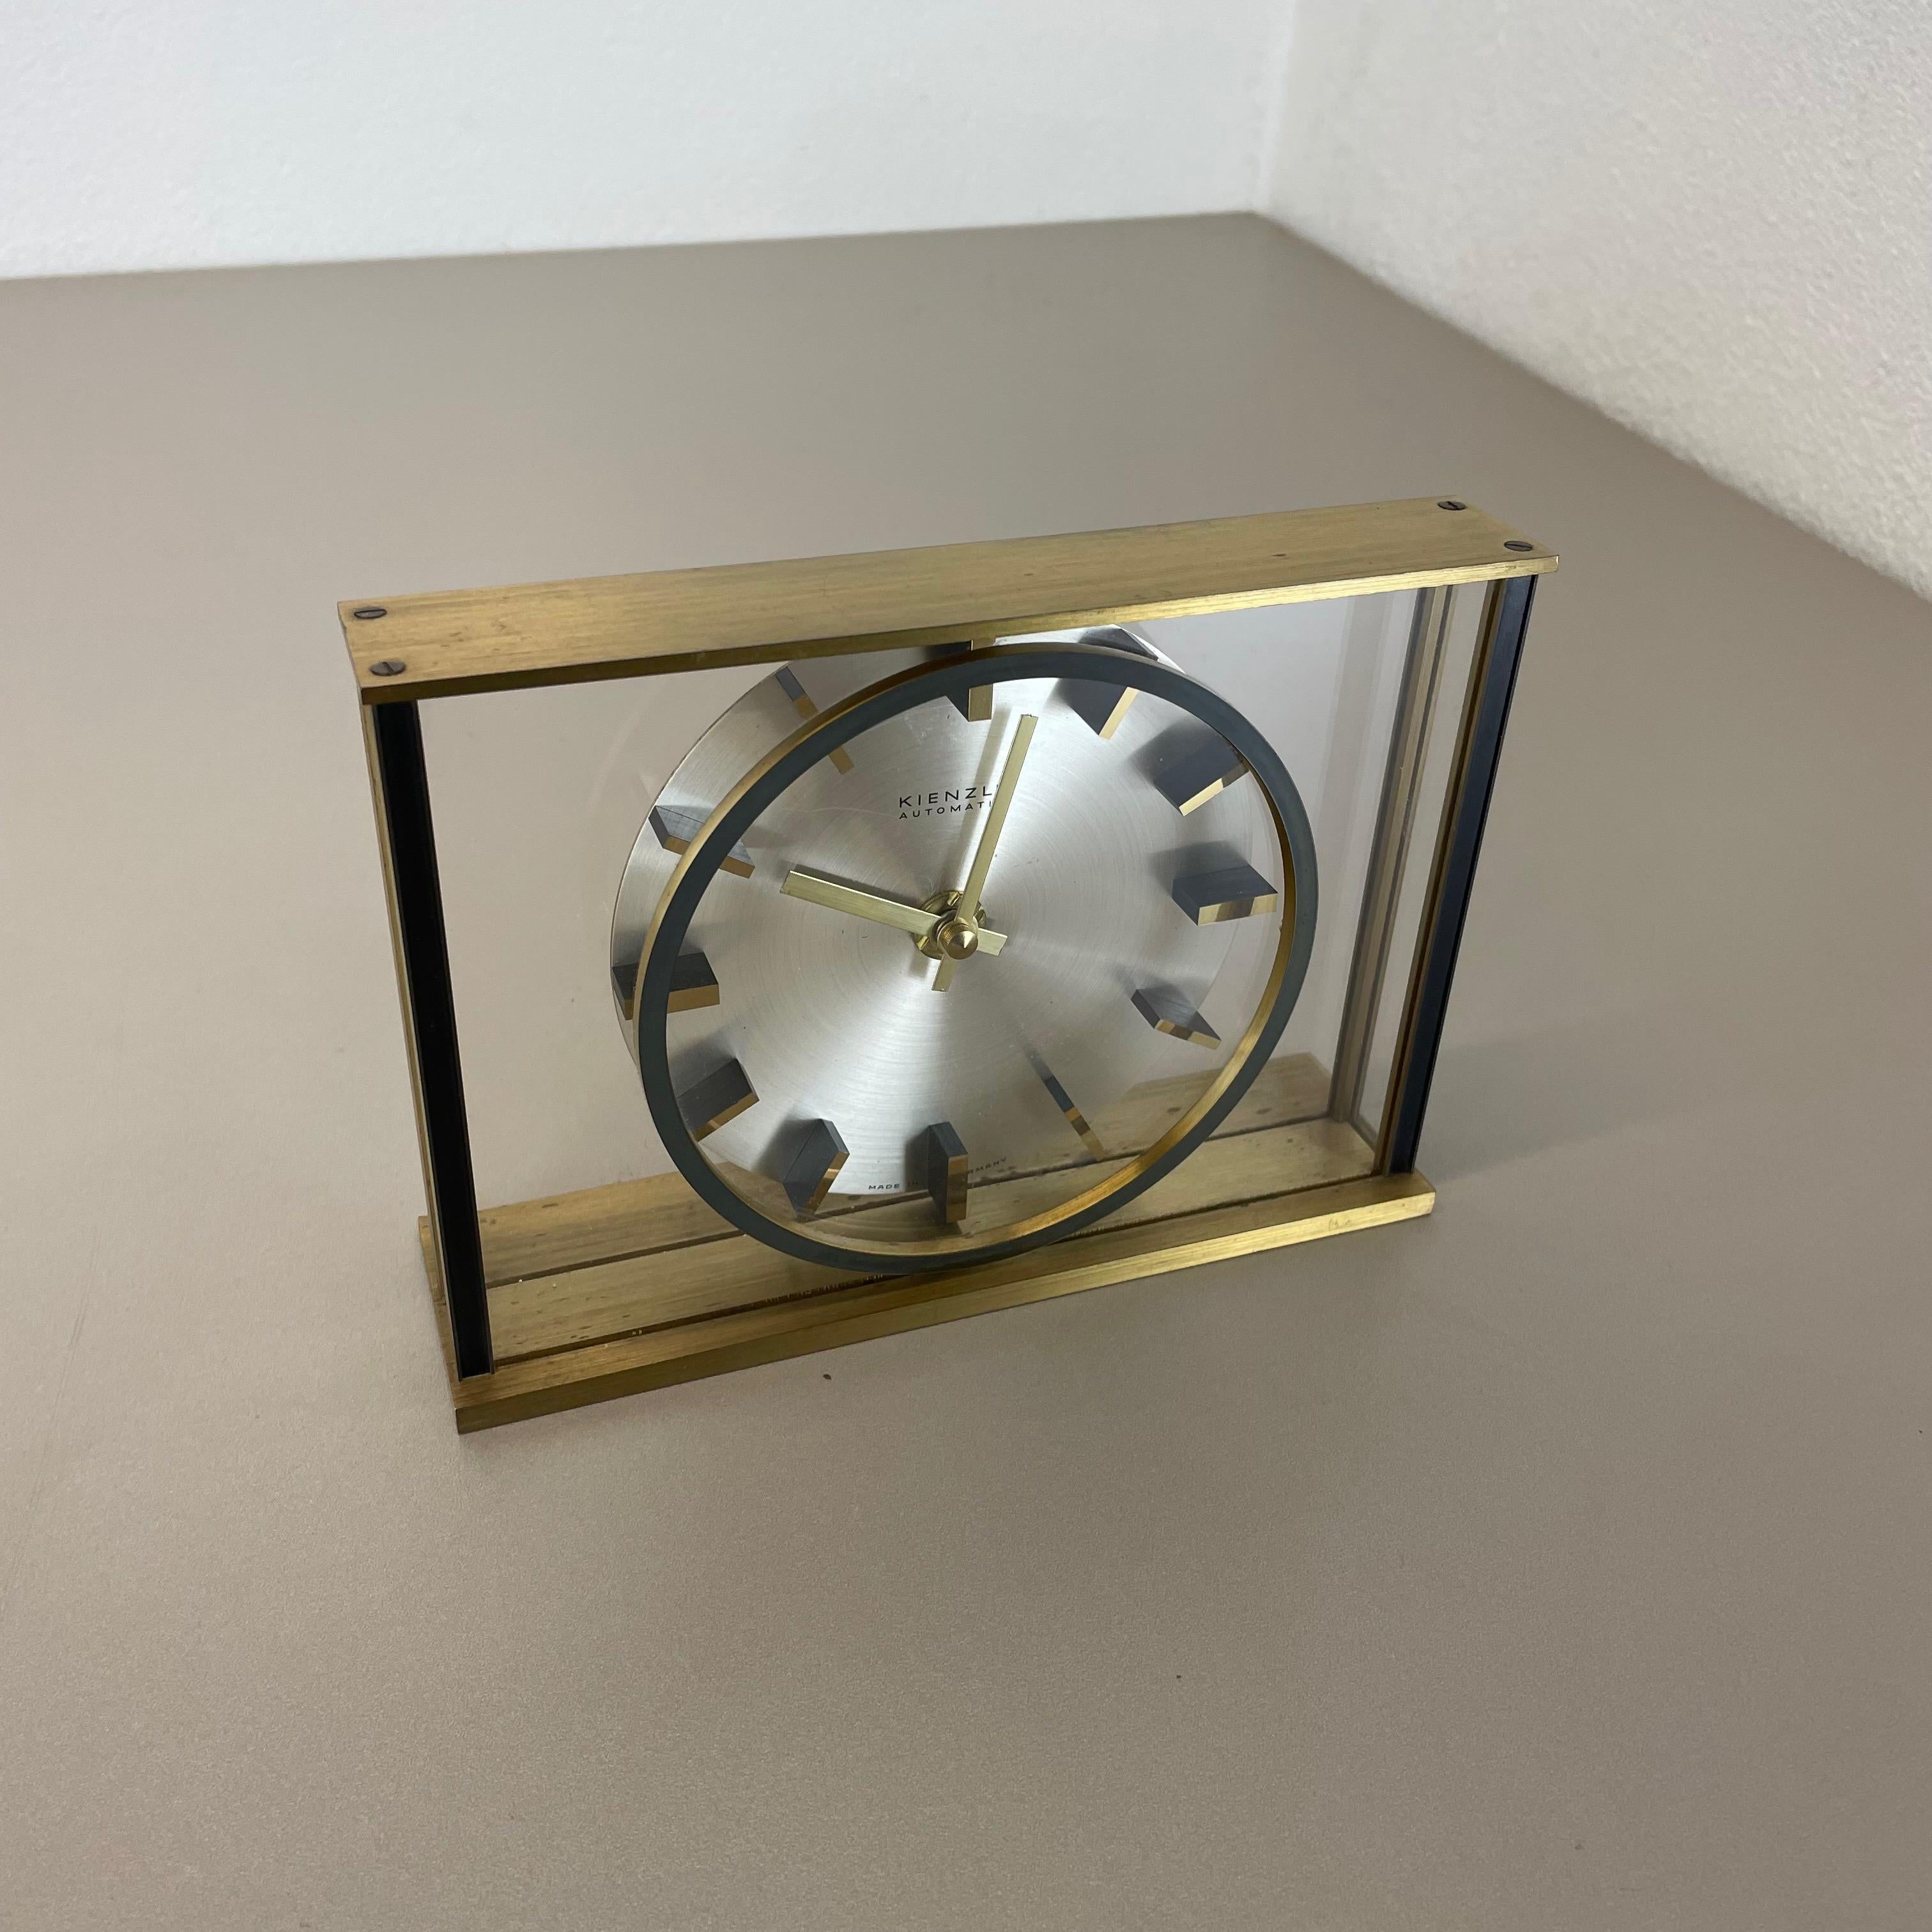 kienzle mantle clock made in germany